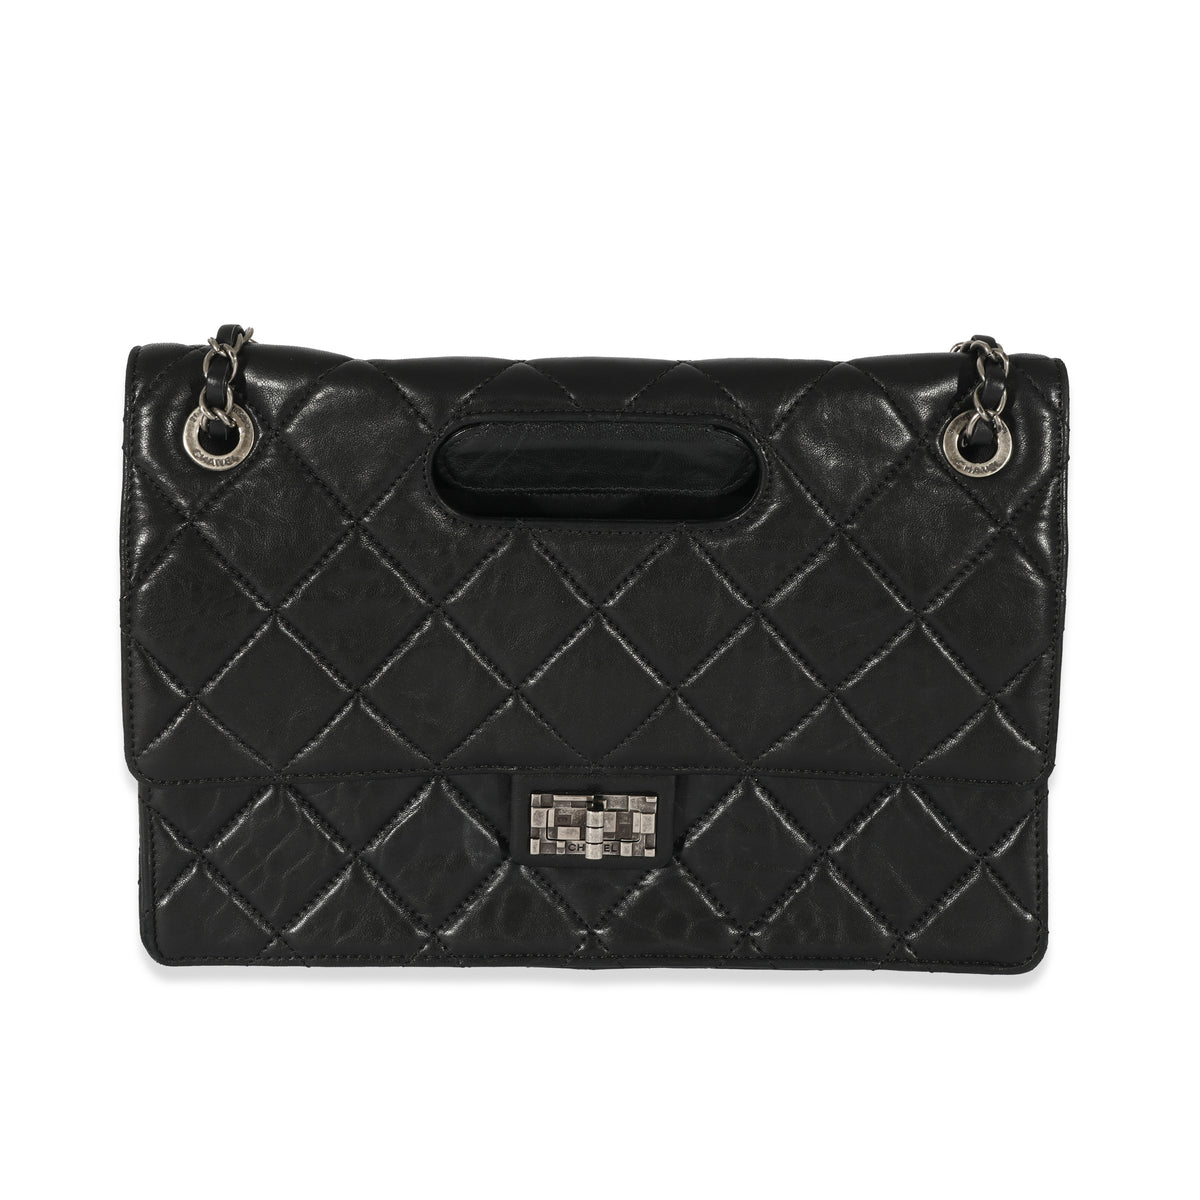 Chanel Black Leather Paris Byzance Reissue Takeaway Flap Bag